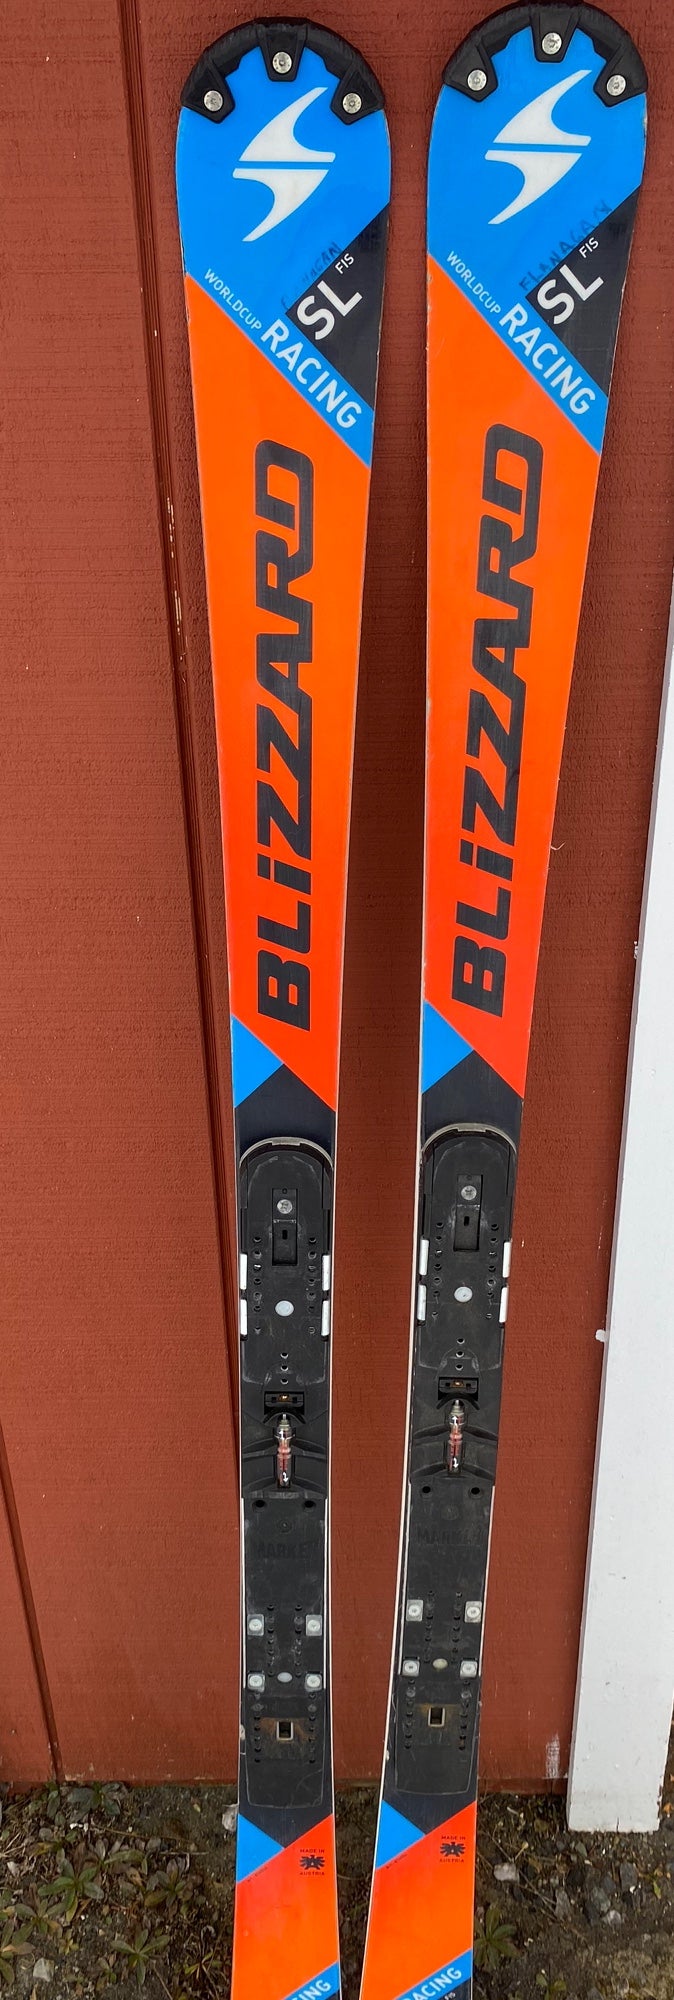 New 2019 Junior Blizzard Firebird SL FIS Racing Skis 150cm pair 